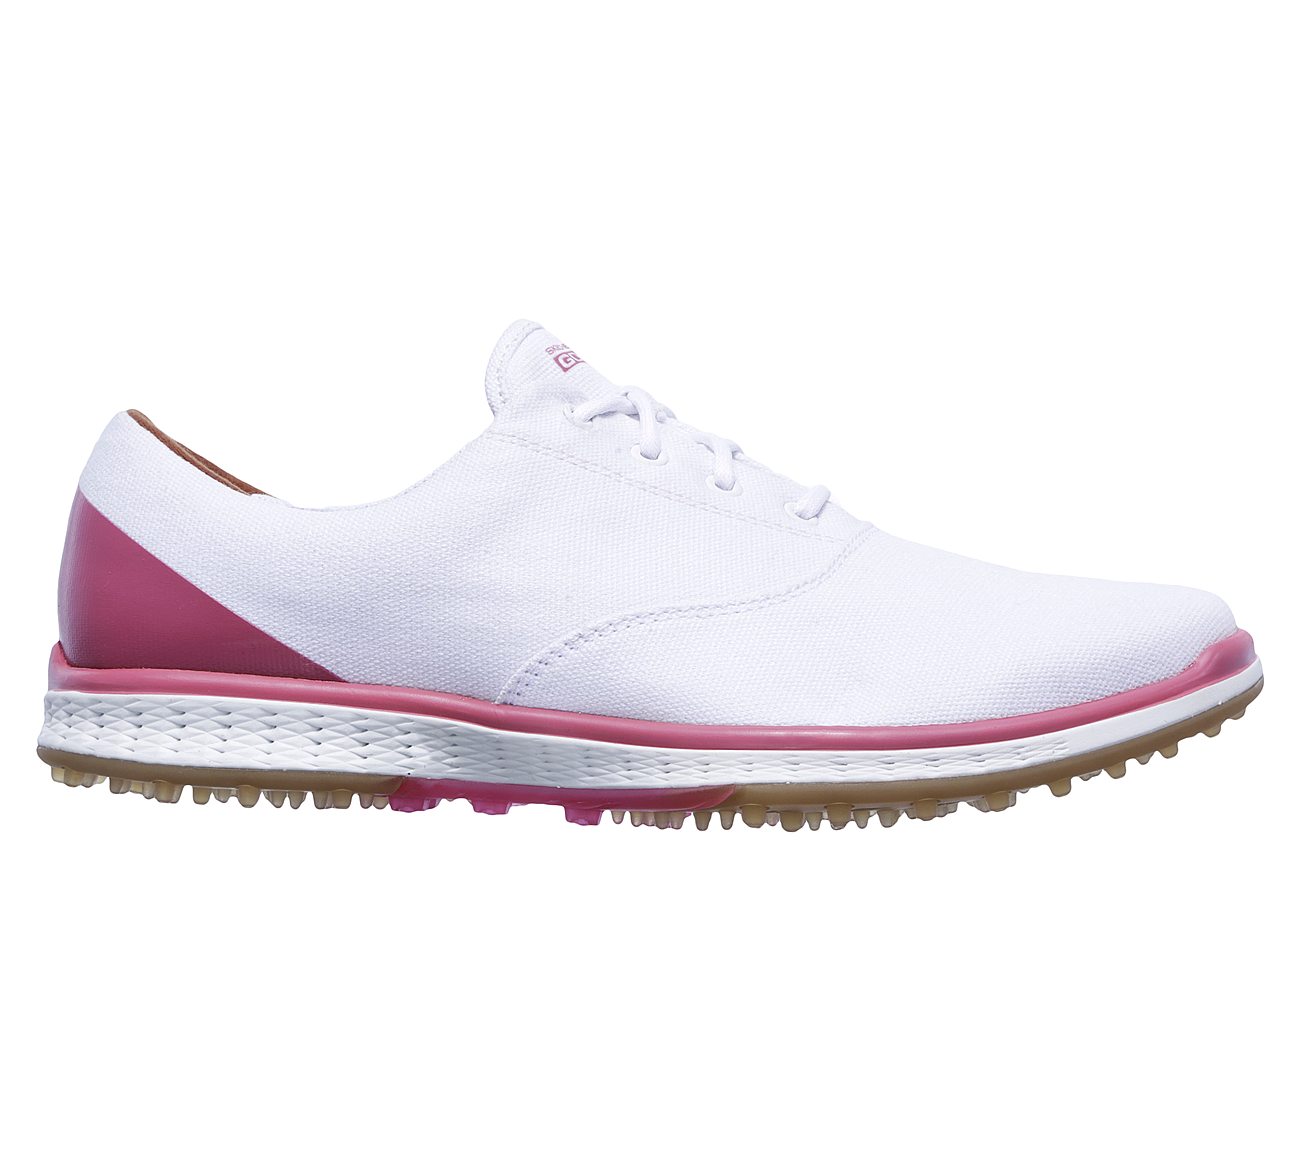 skechers golf shoes tucson \u003e Factory Store